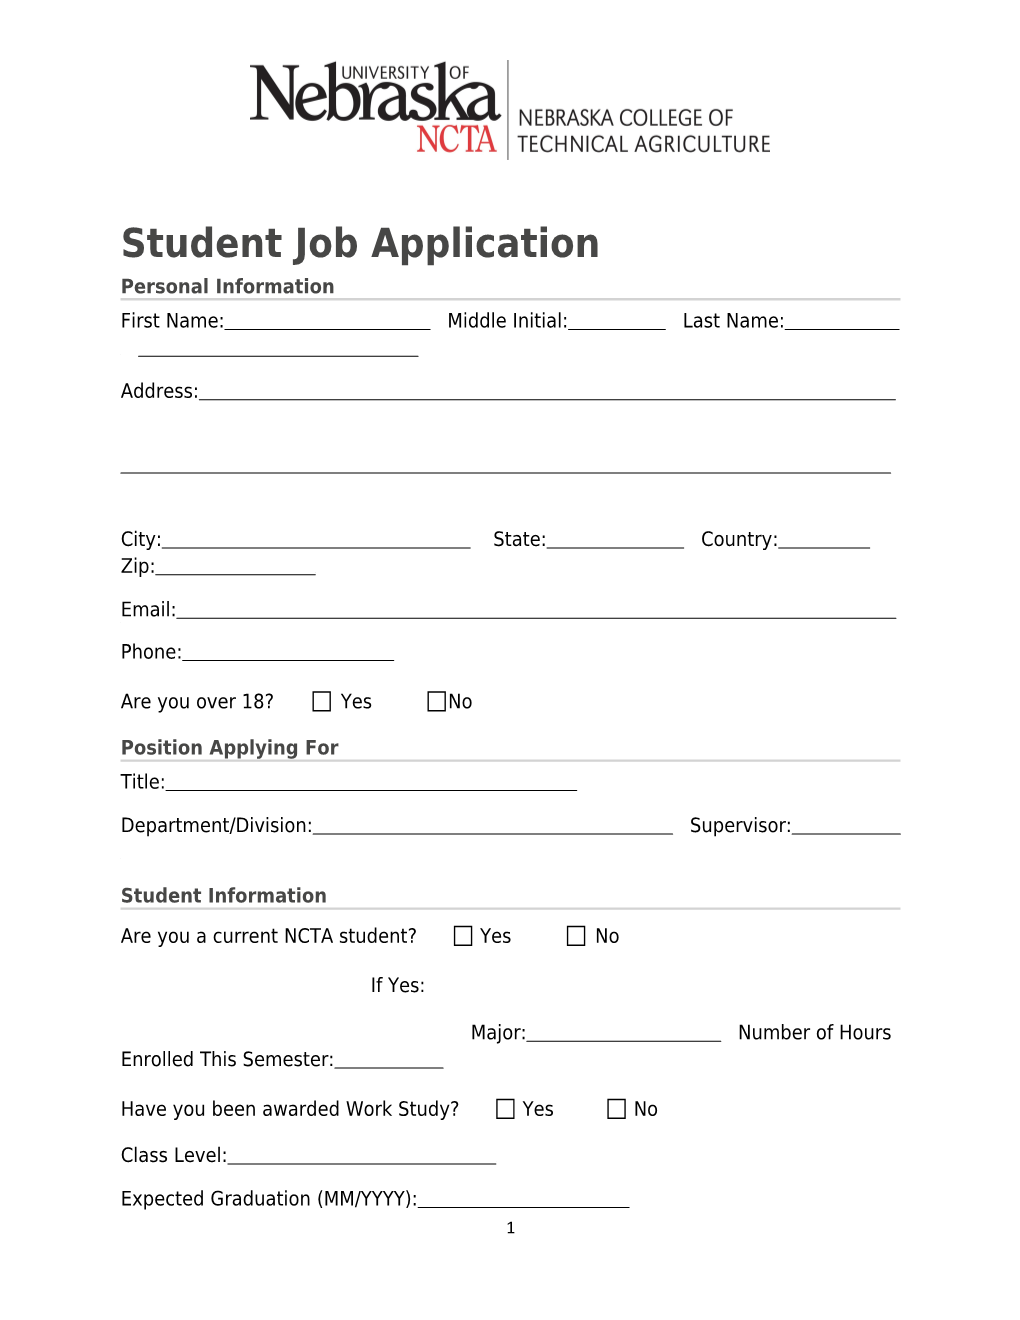 Student Job Application